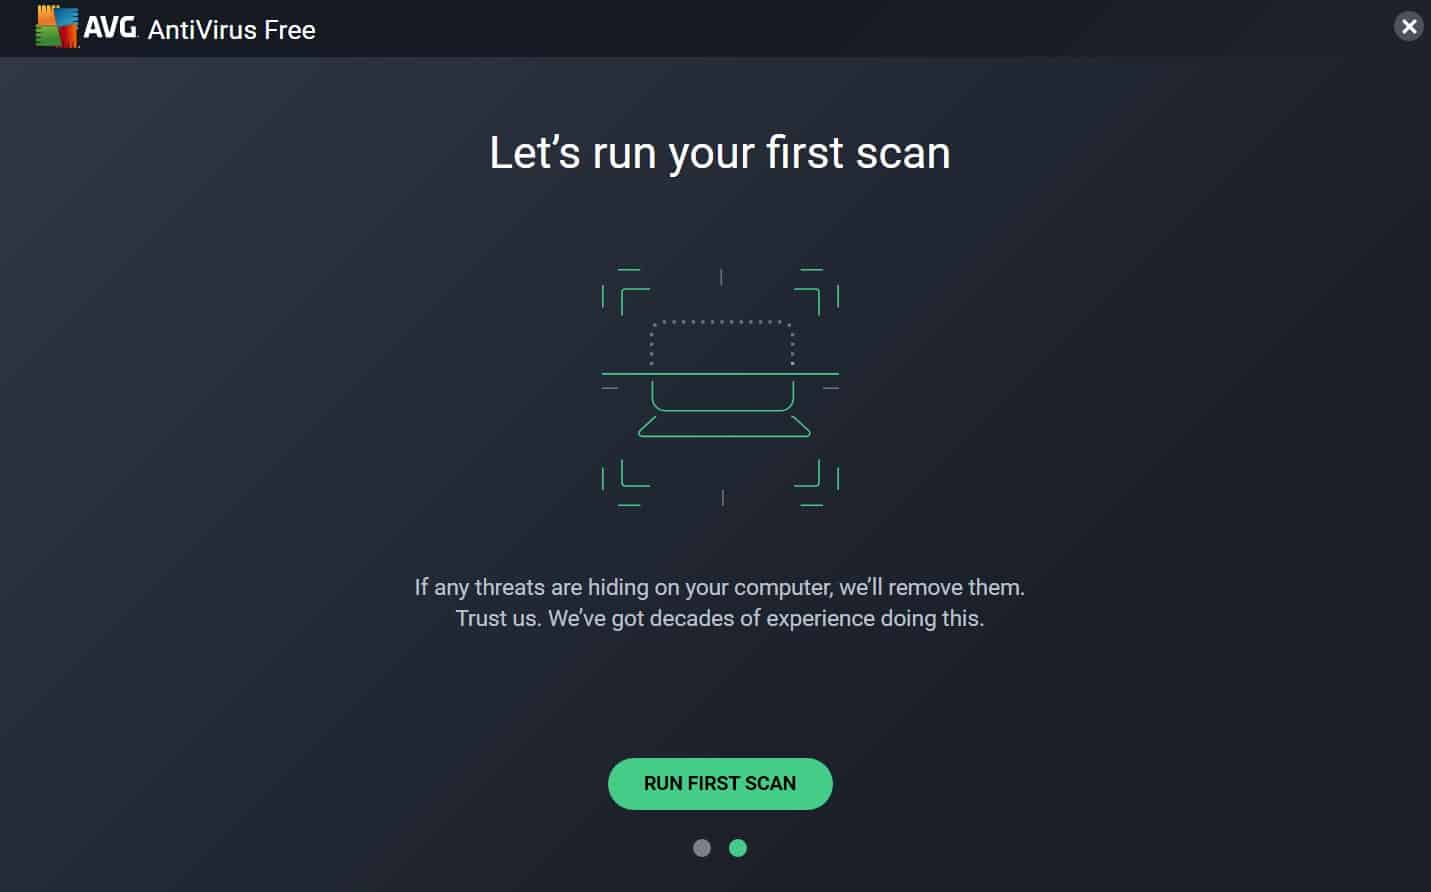 Run a virus scan on your computer
Open your antivirus program